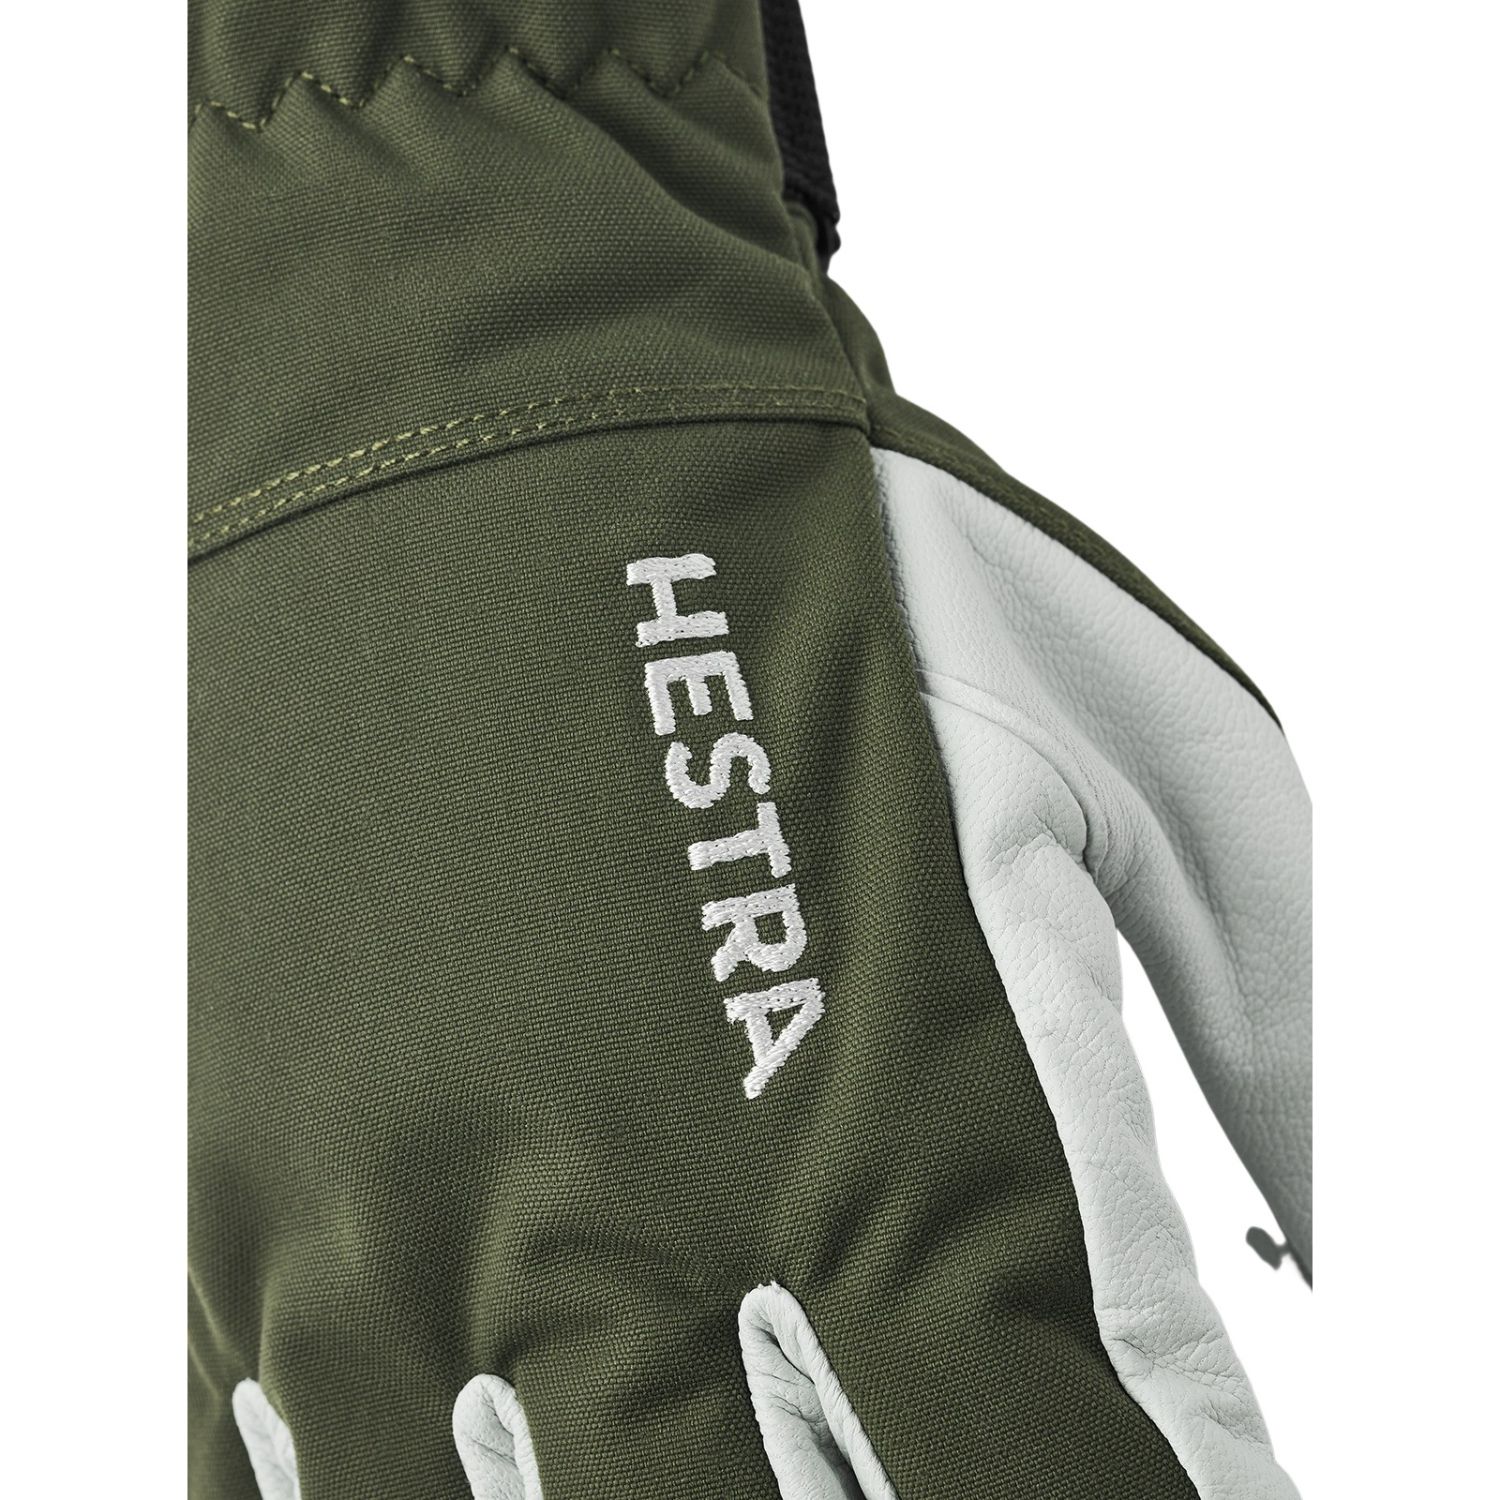 Hestra Army Leather Heli Ski, Skihansker, Olive